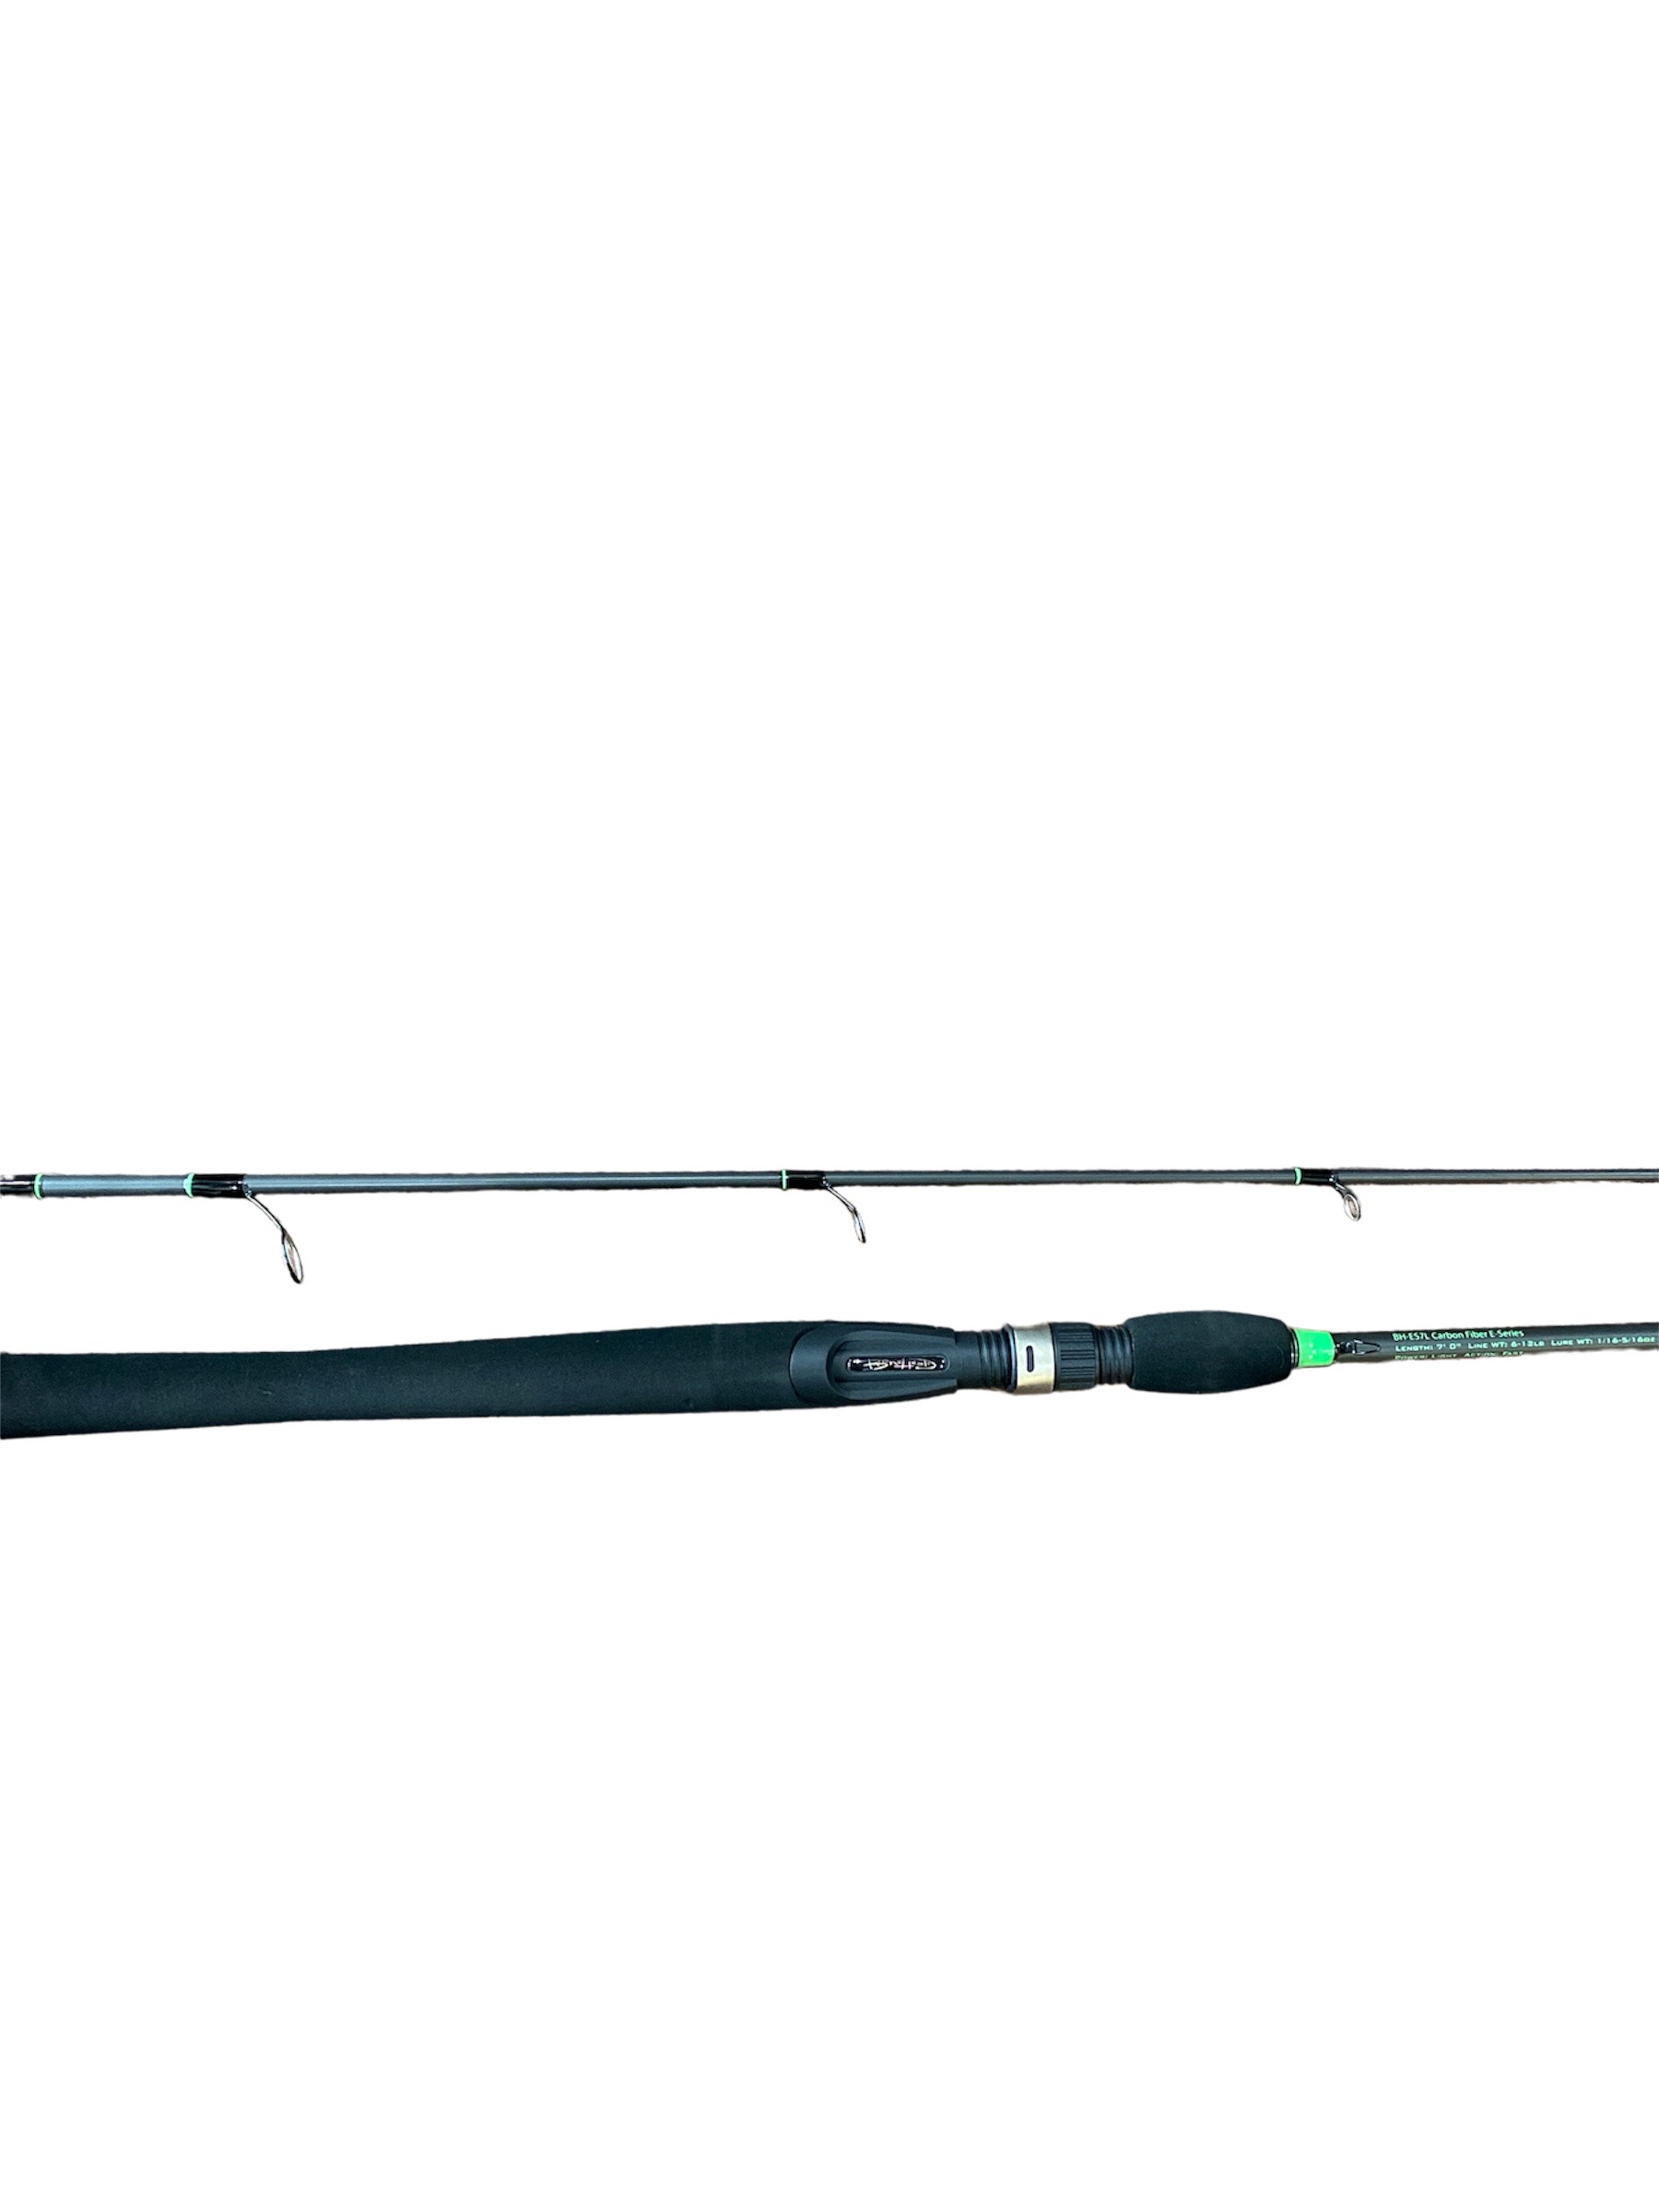 7’ E-Series Carbon Fiber Spinning Rod